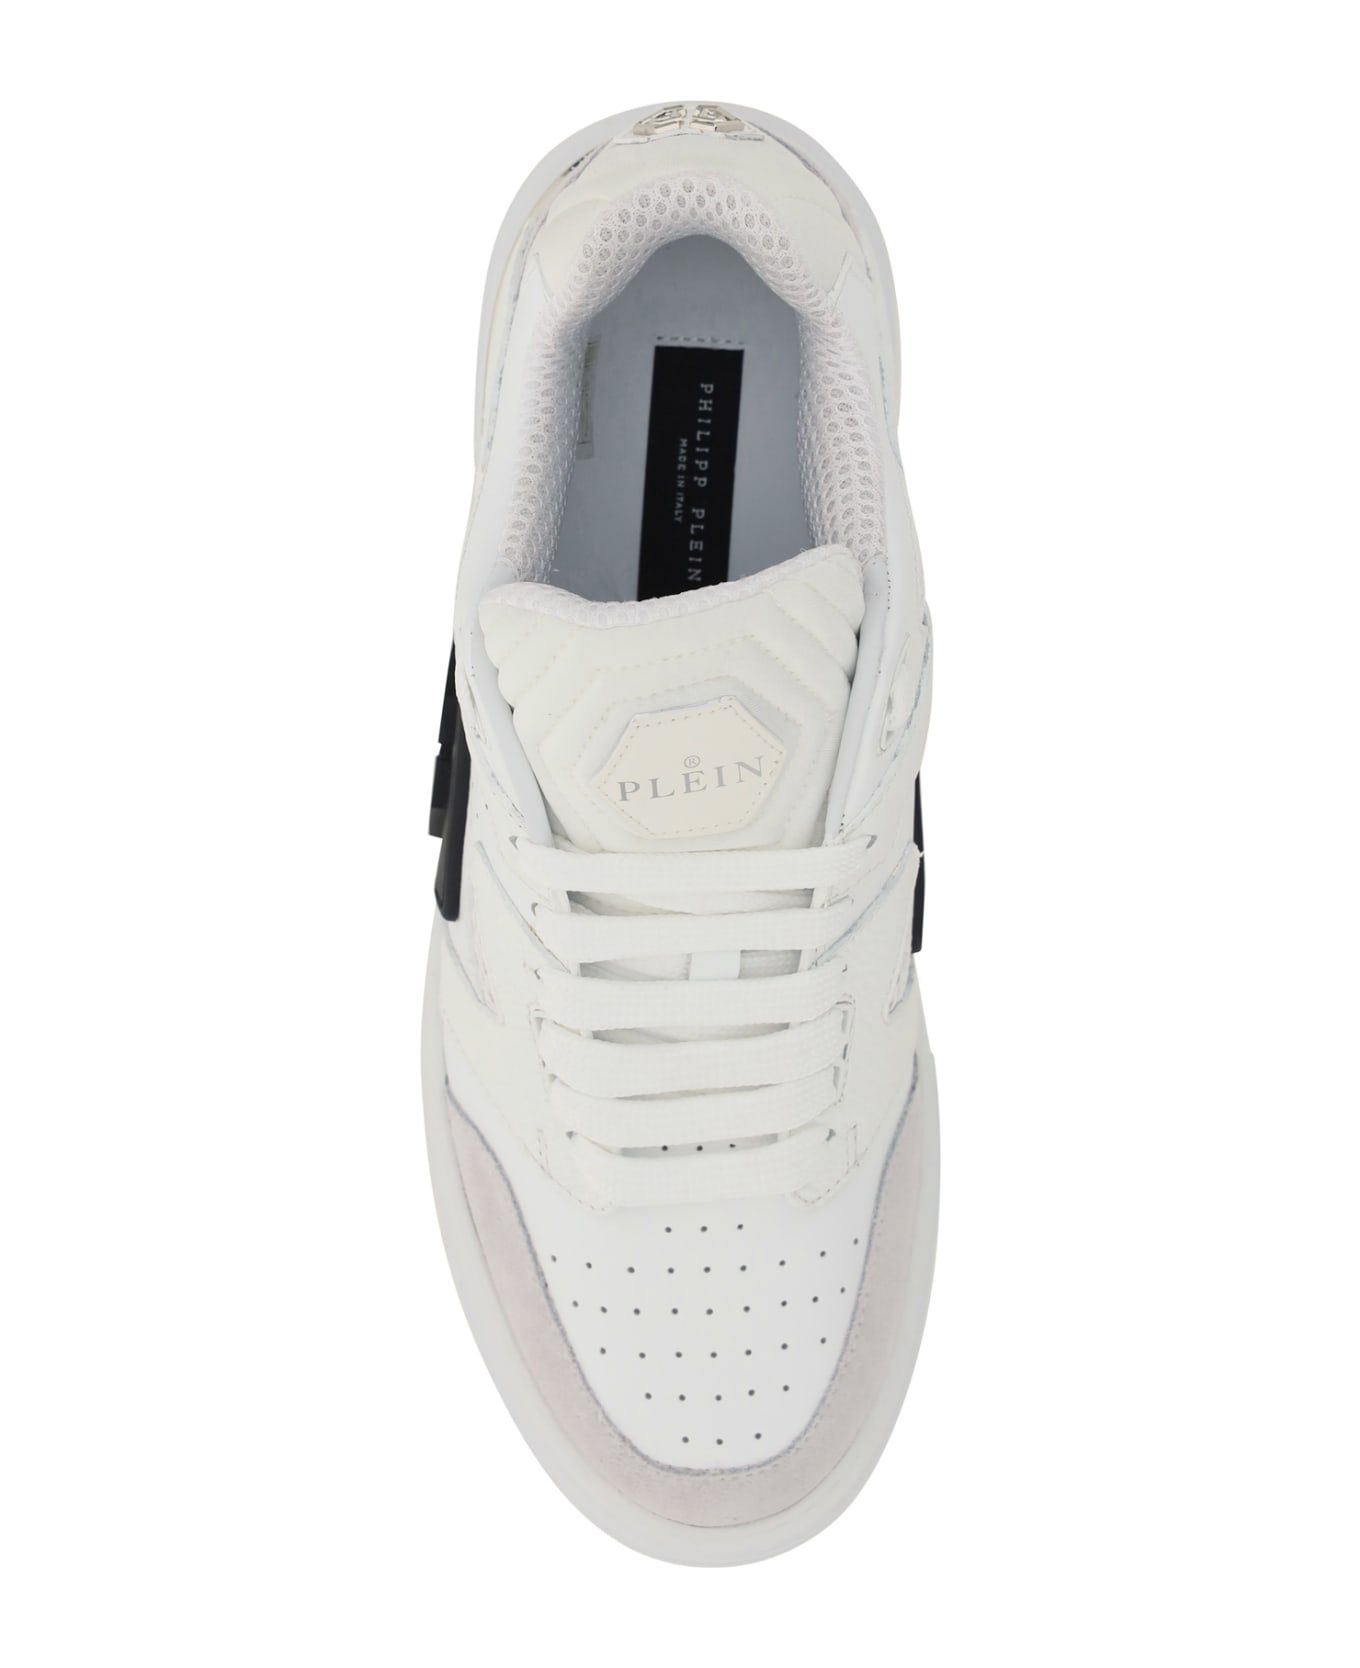 Philipp Plein Sneakers - White スニーカー